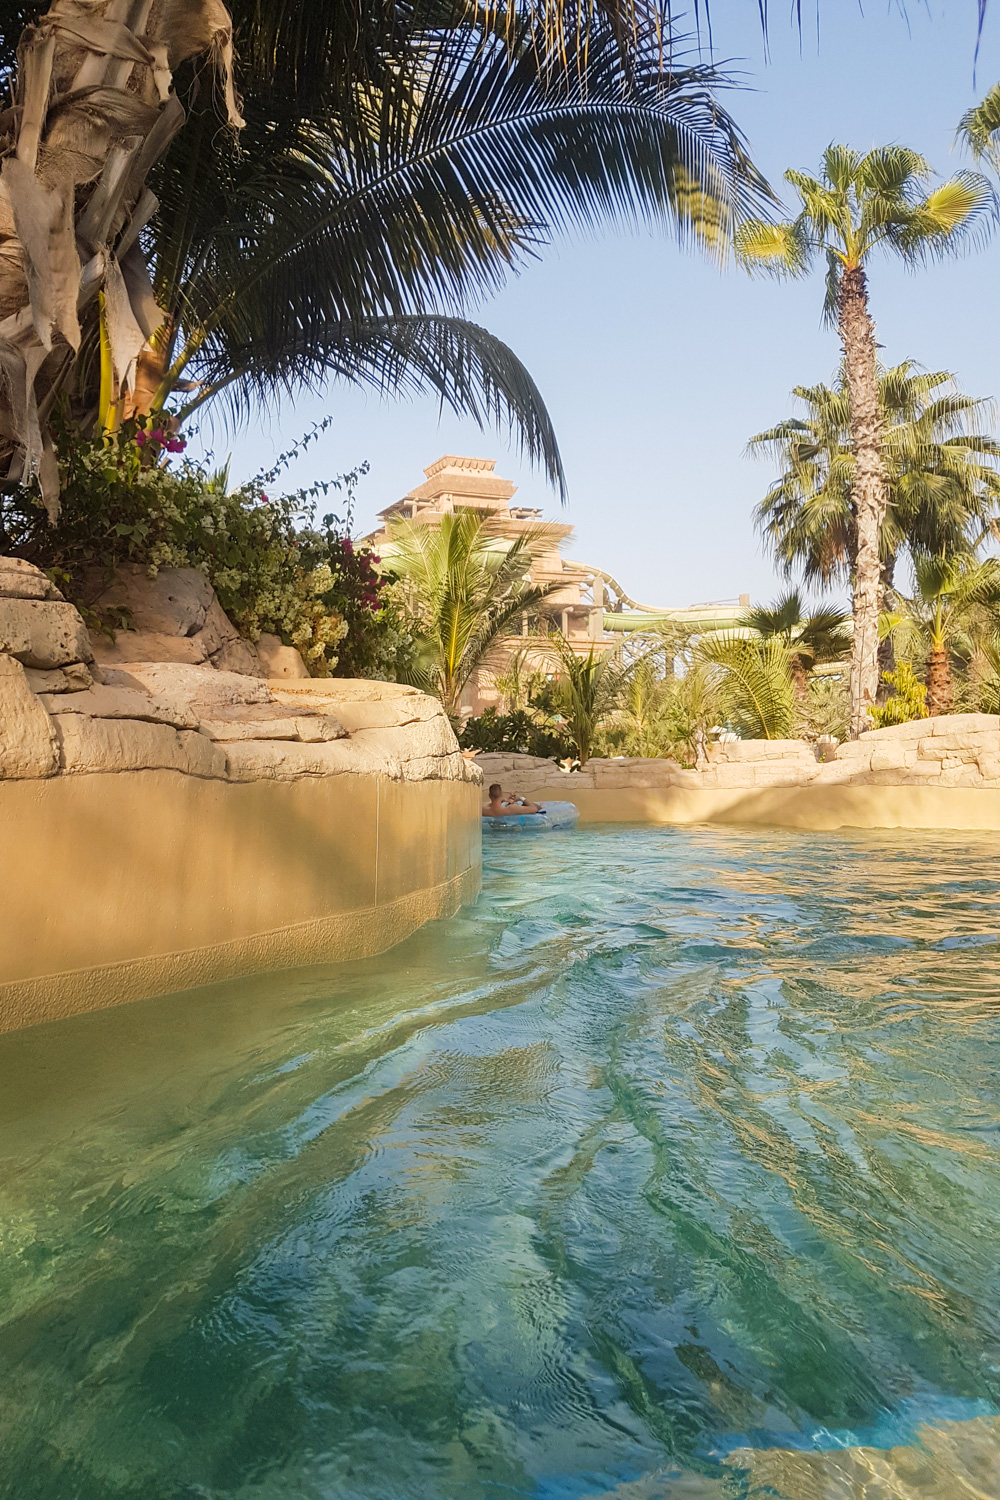 Lazy River at Aquaventure Waterpark, Atlantis the Palm, Dubai